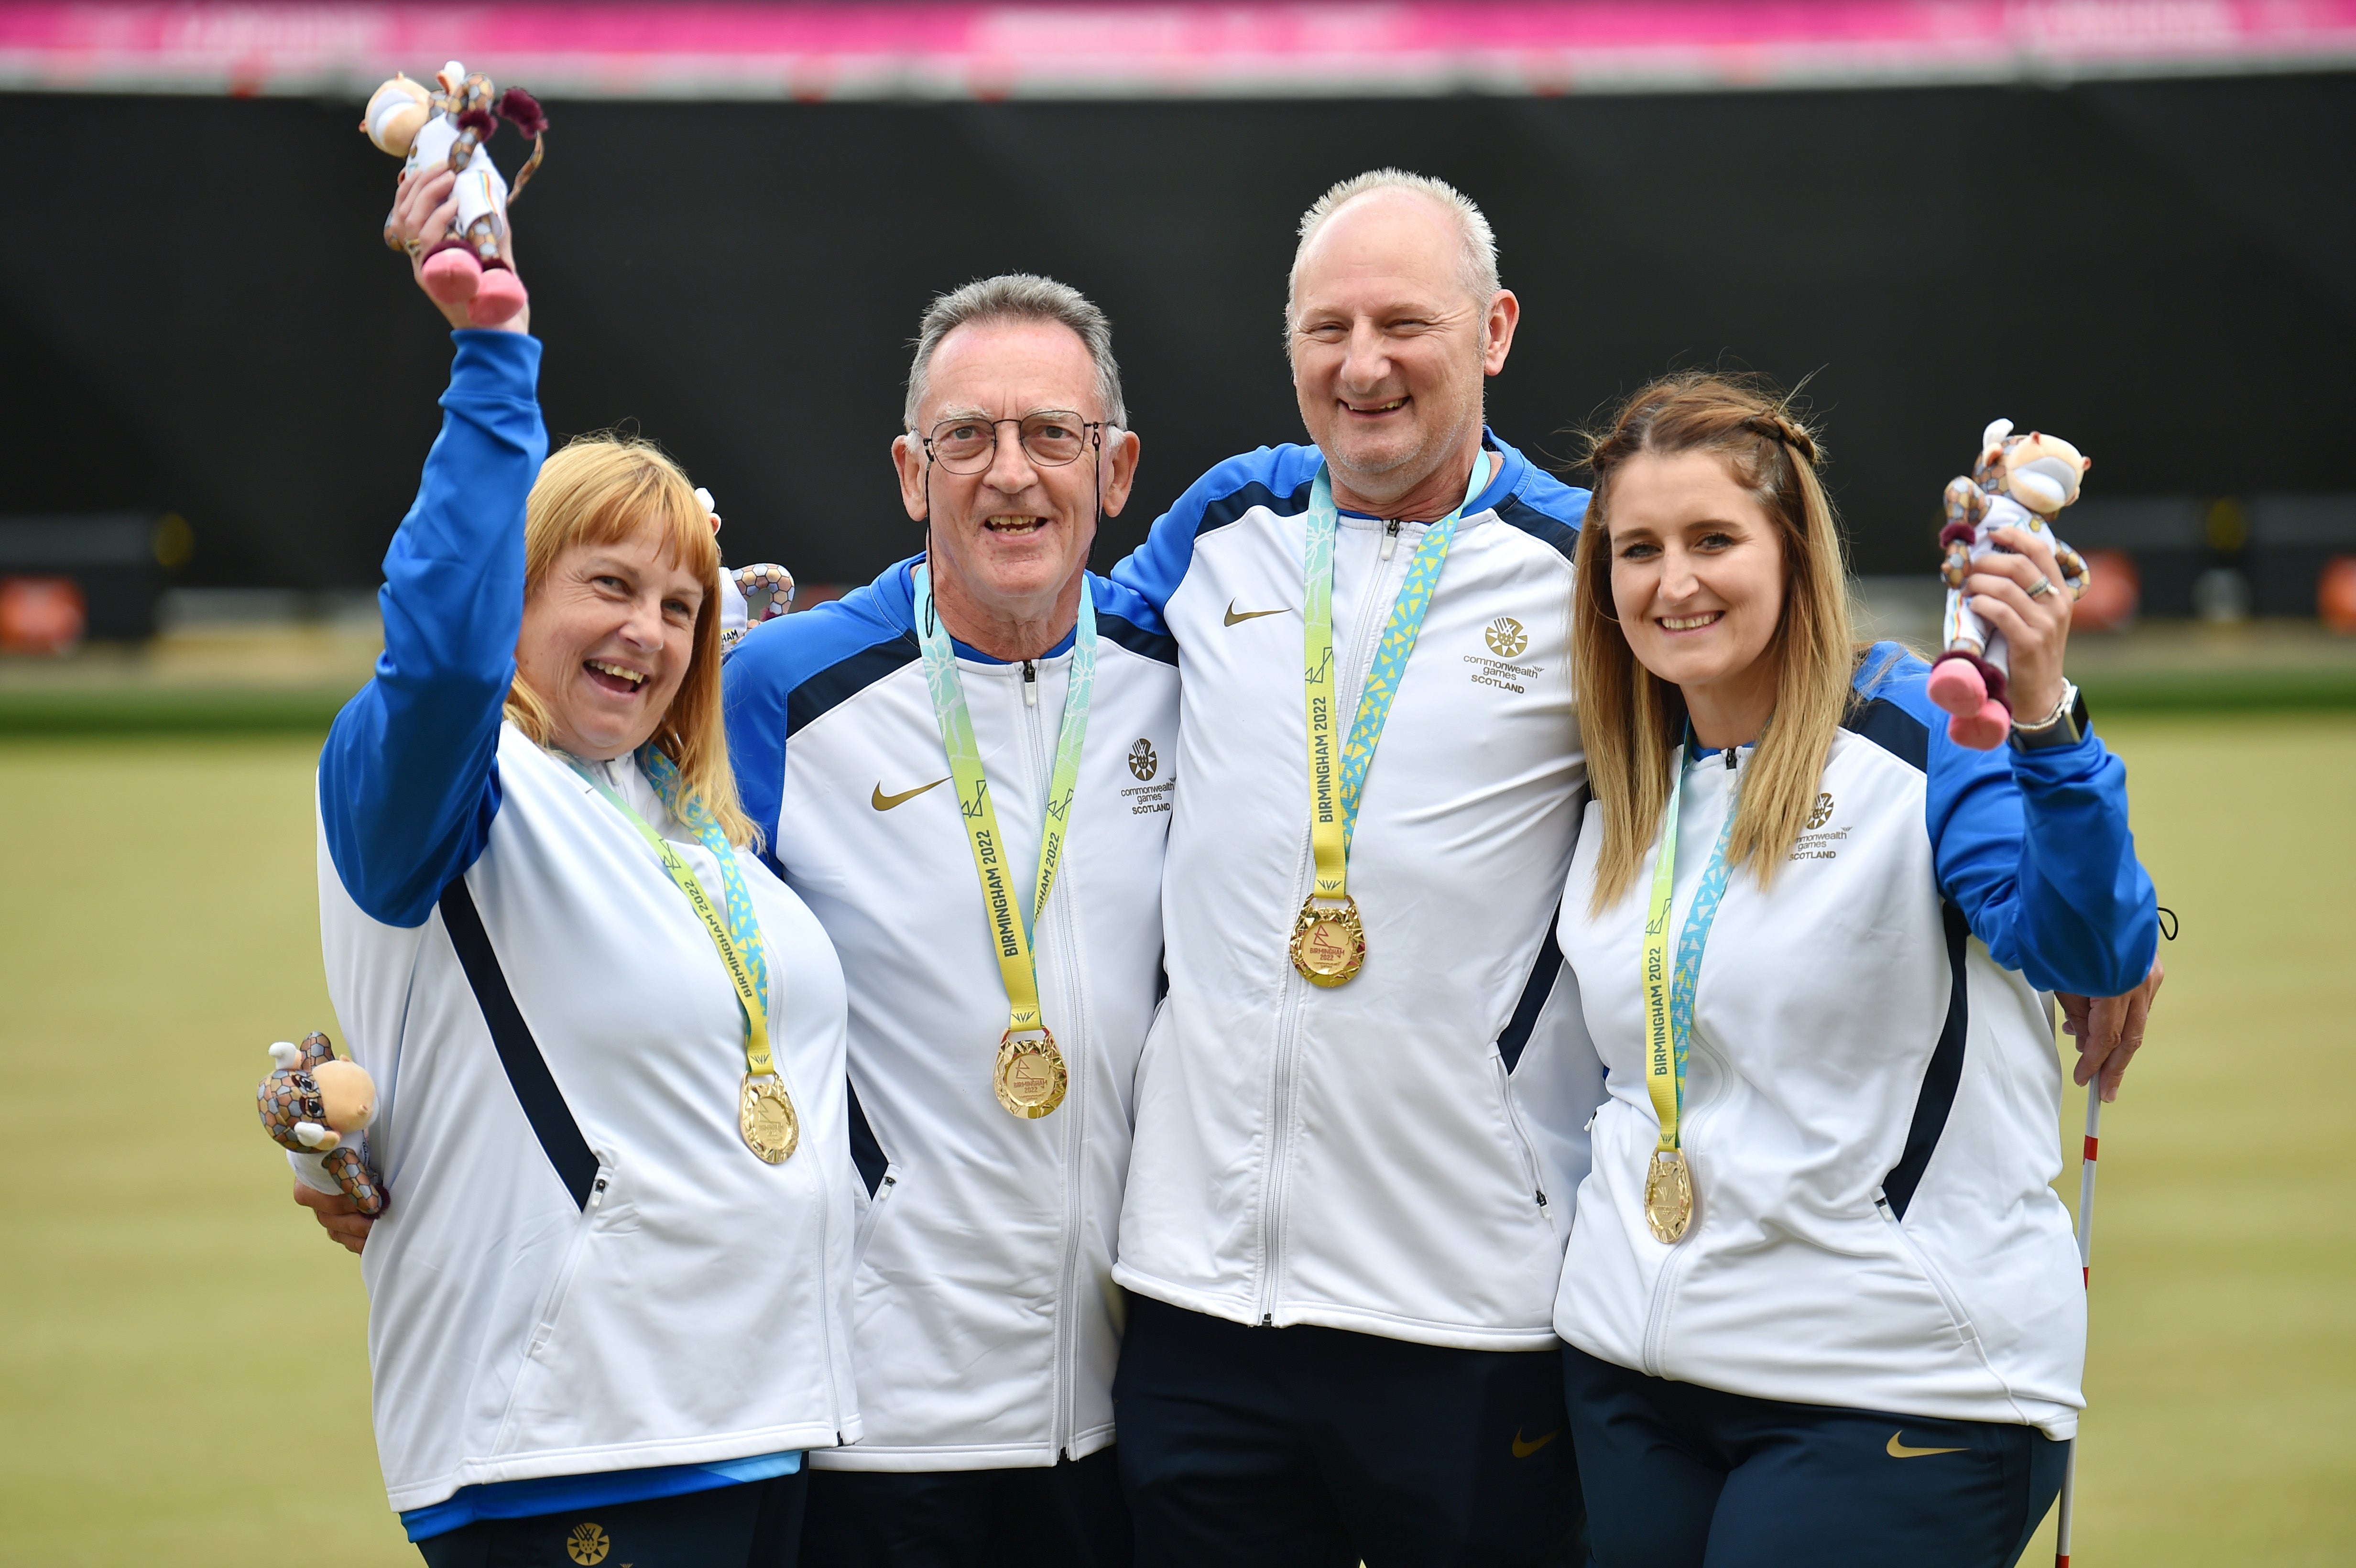 Gold medalists Melanie Inness, George Miller, Robert Barr and Sarah Jane Ewing of Team Scotland celebrate